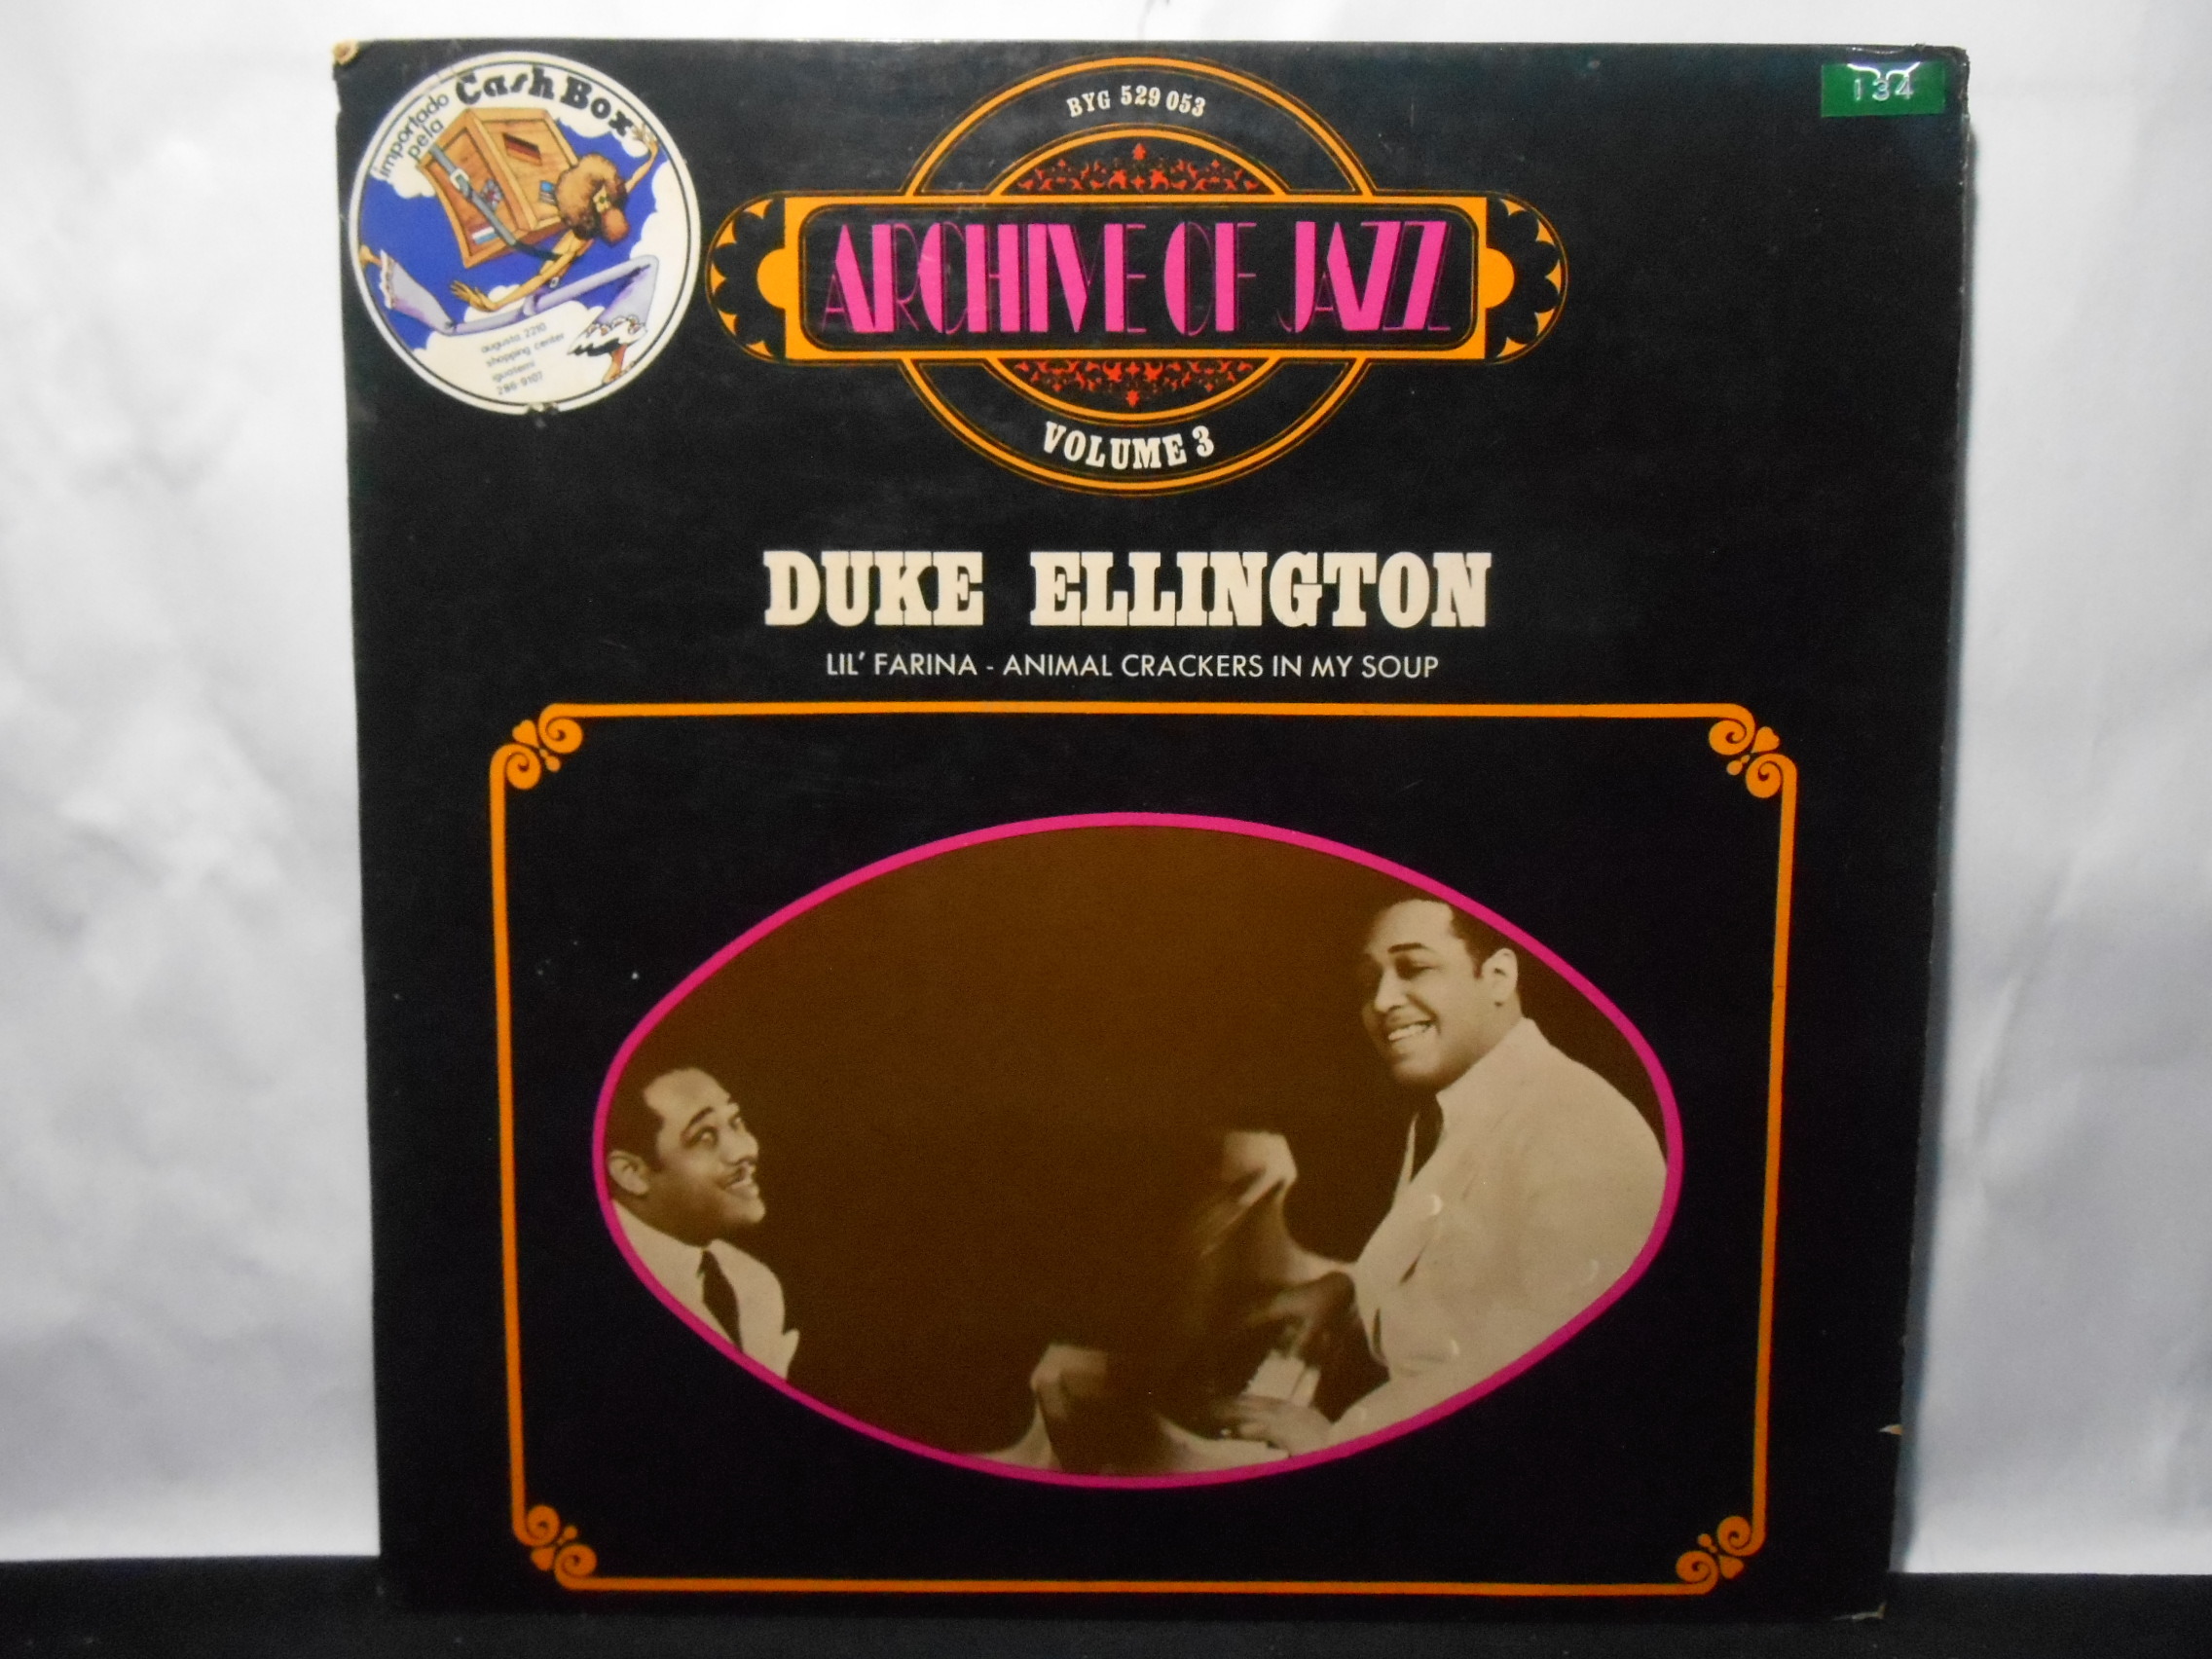 VINIL - Duke Ellington - Archive Of Jazz Volume 3 Animal Crackers In My Soup (France)